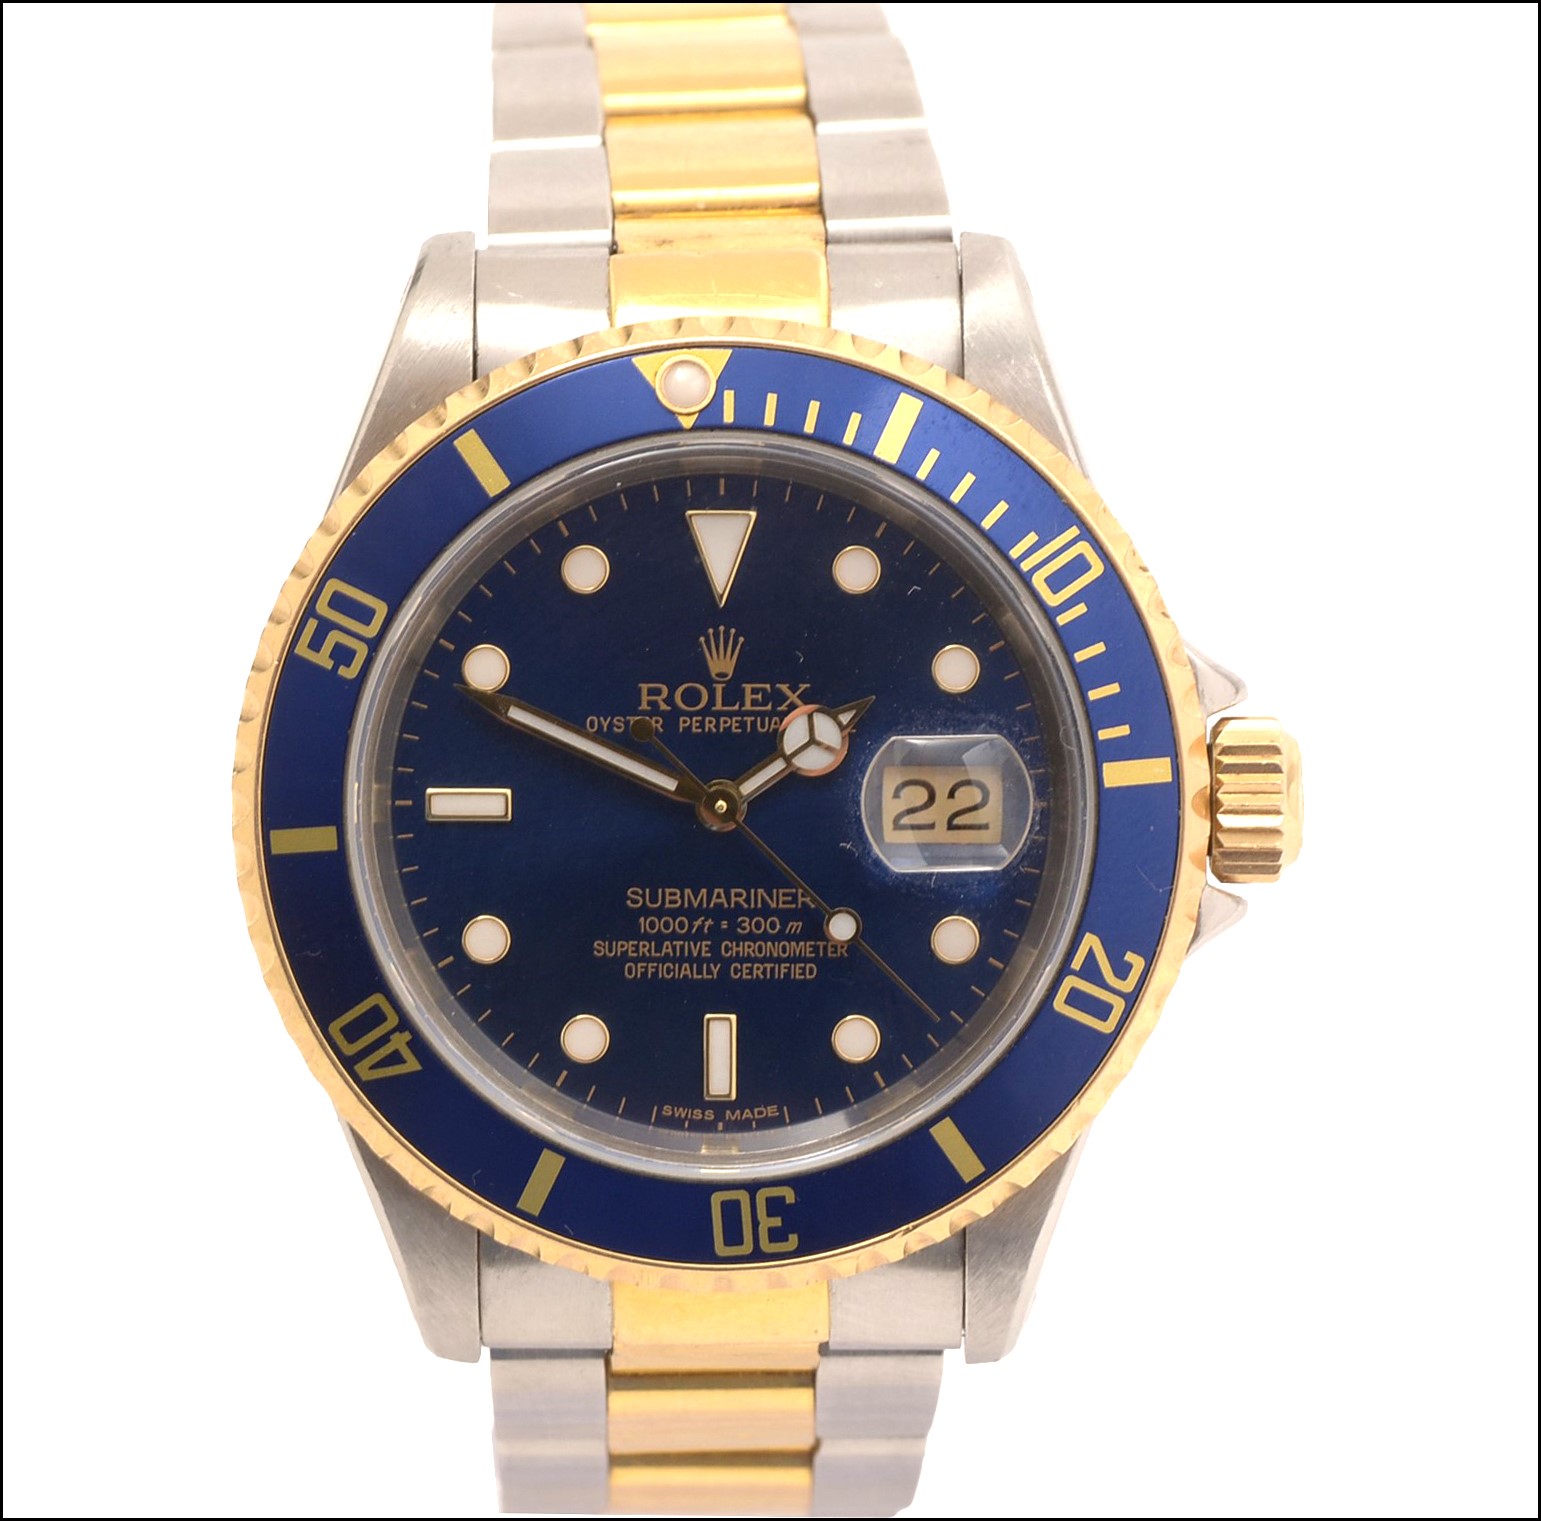 Fine Watches Auction